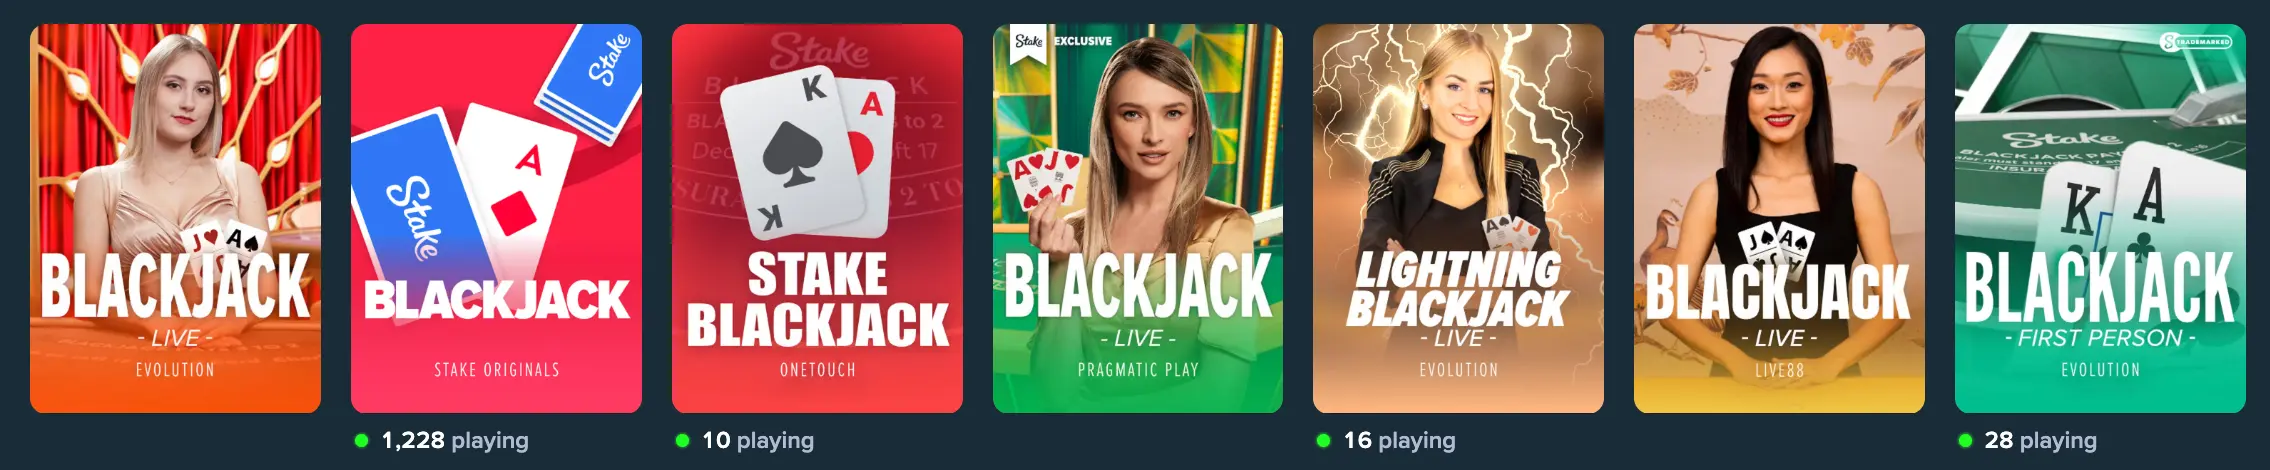 Blackjack en el Casino Stake